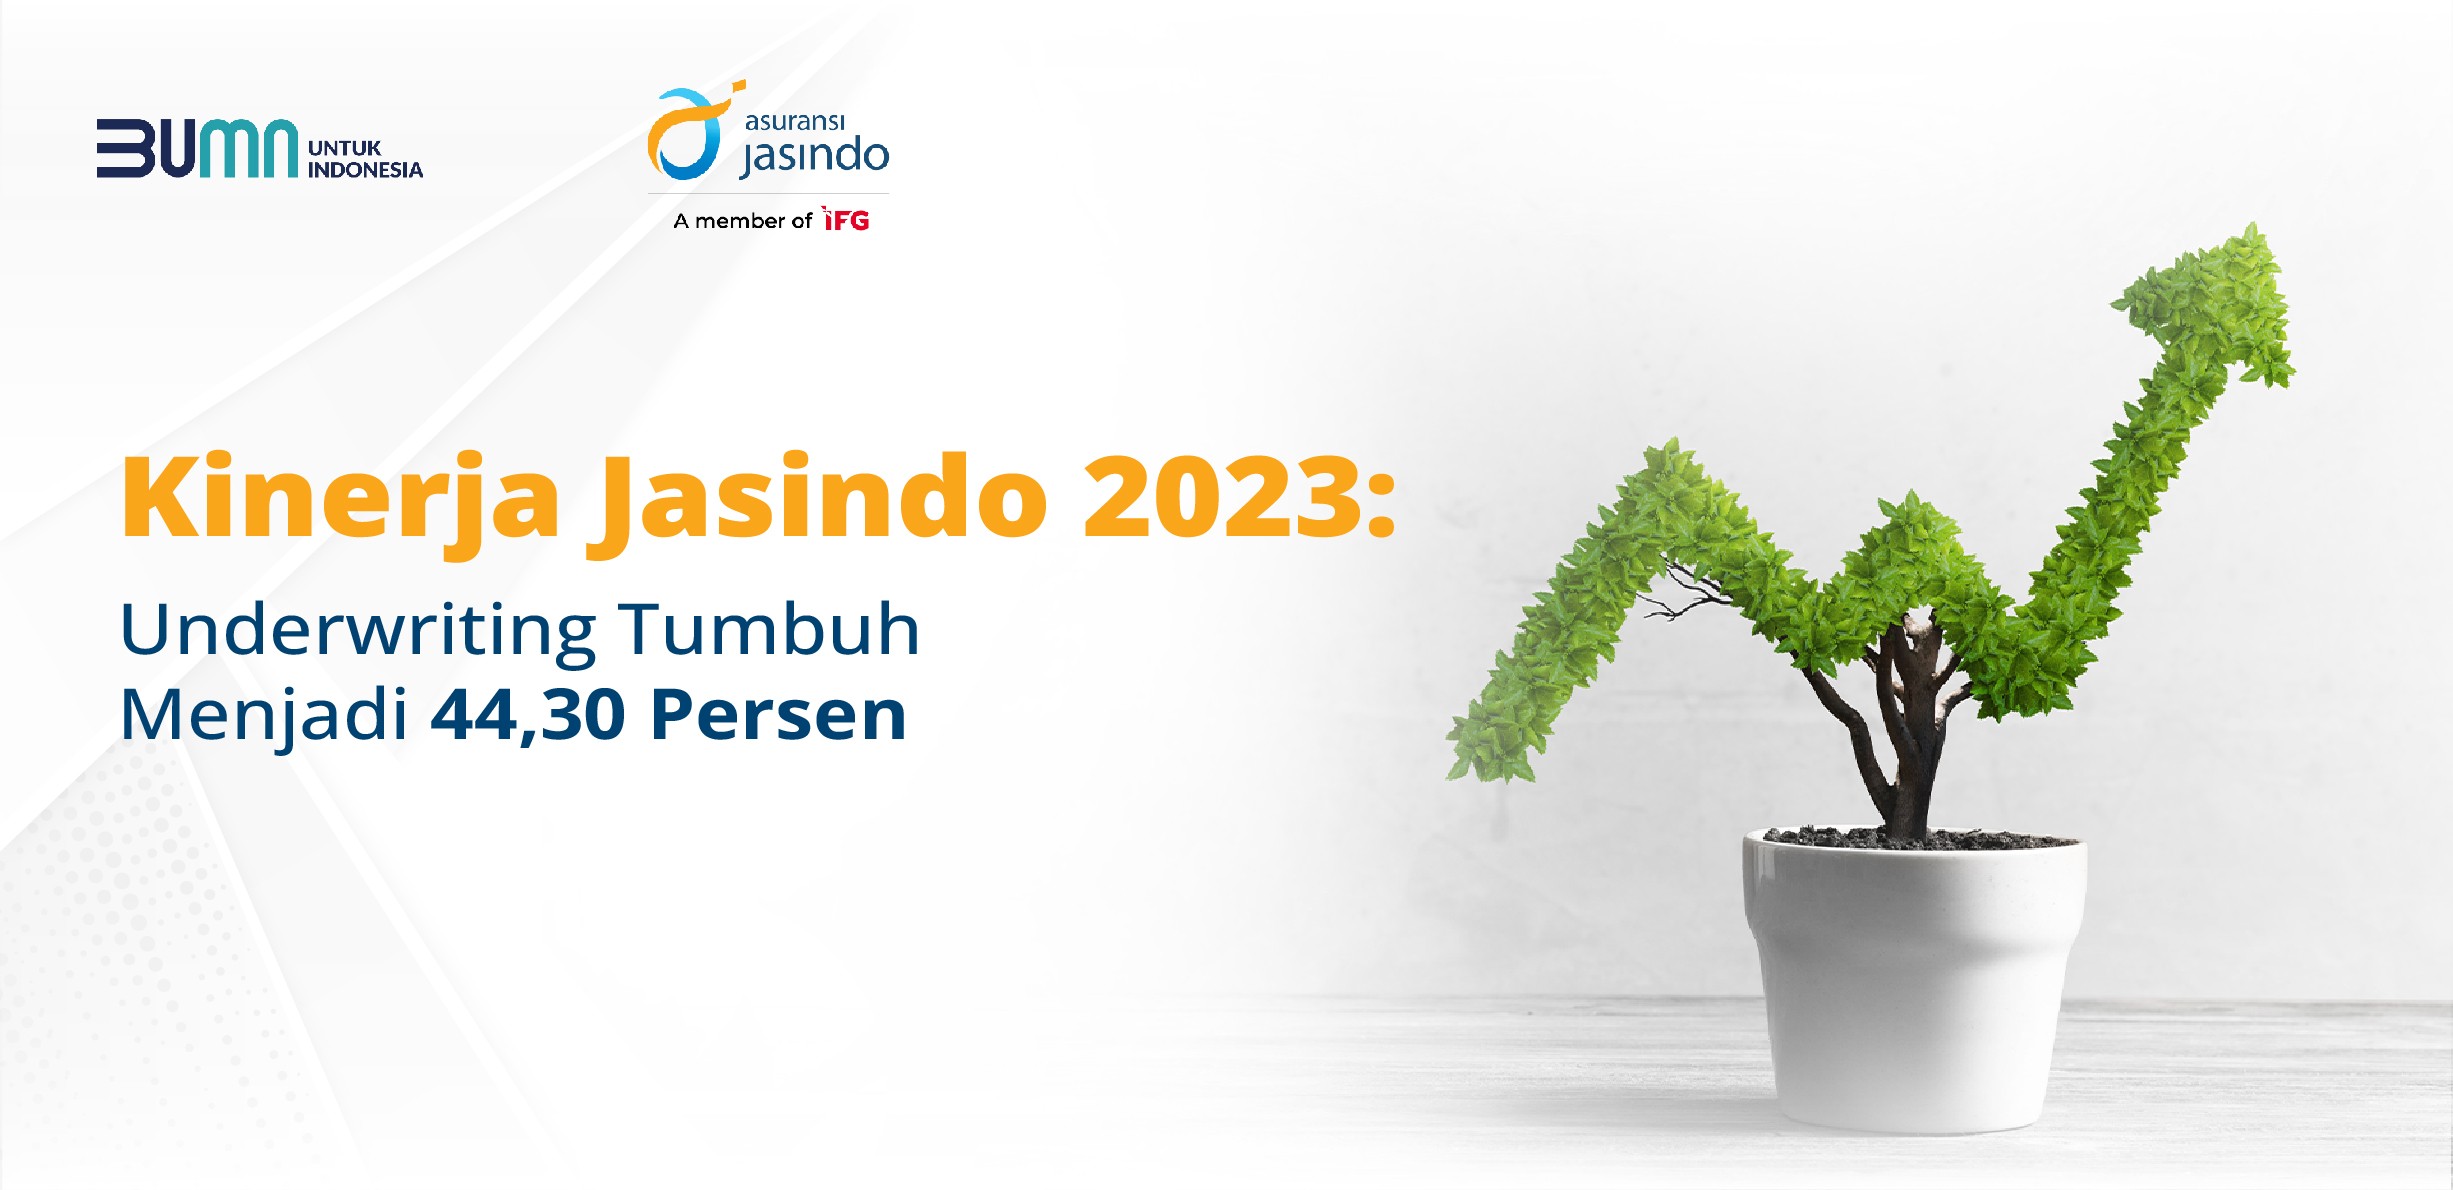 Kinerja Jasindo 2023: Underwriting Tumbuh Menjadi 44,30 Persen